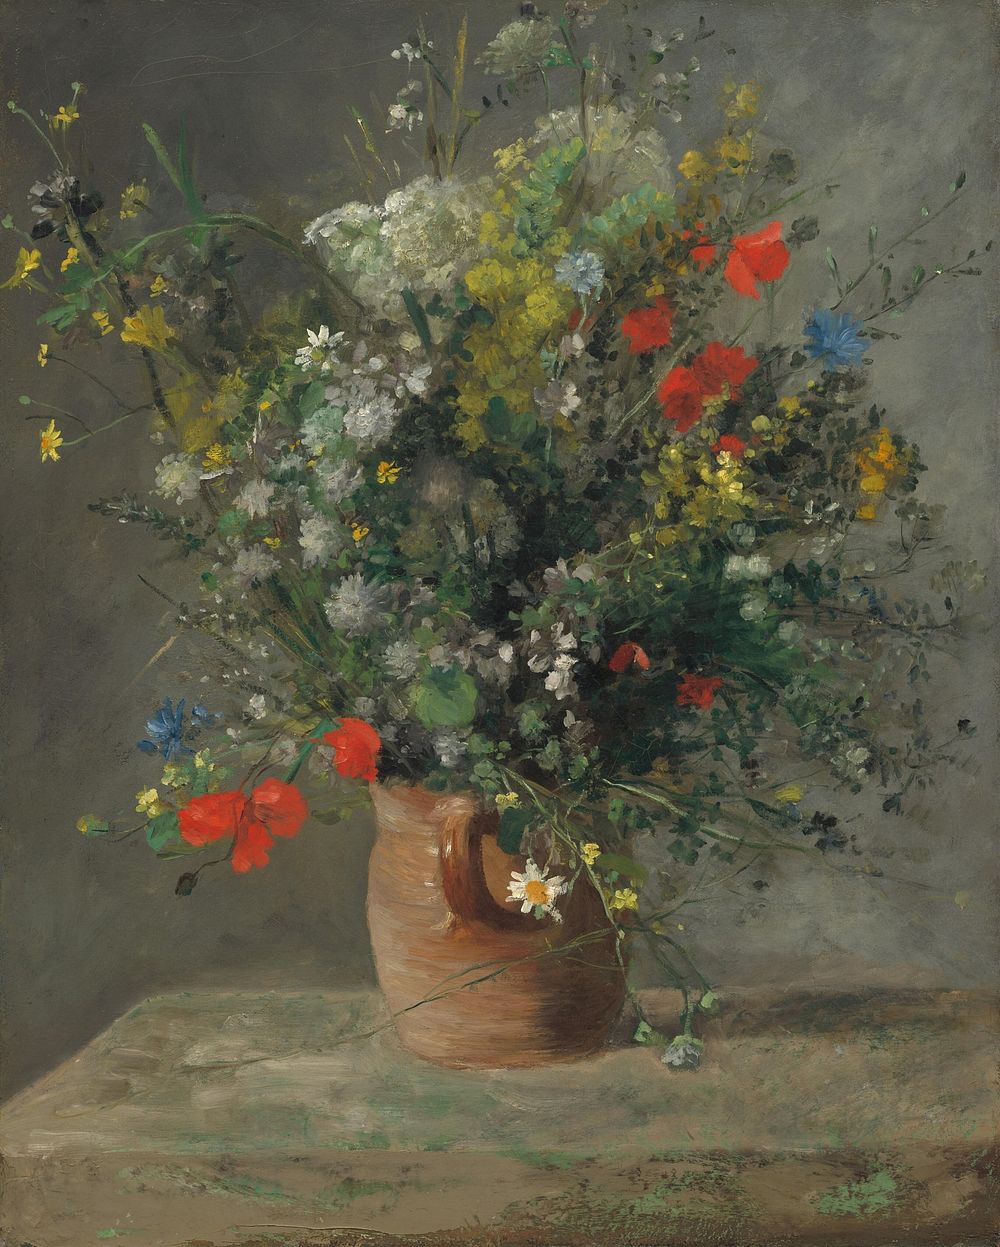 Flowers in a Vase (c. 1866) painting in high resolution by Pierre-Auguste Renoir.